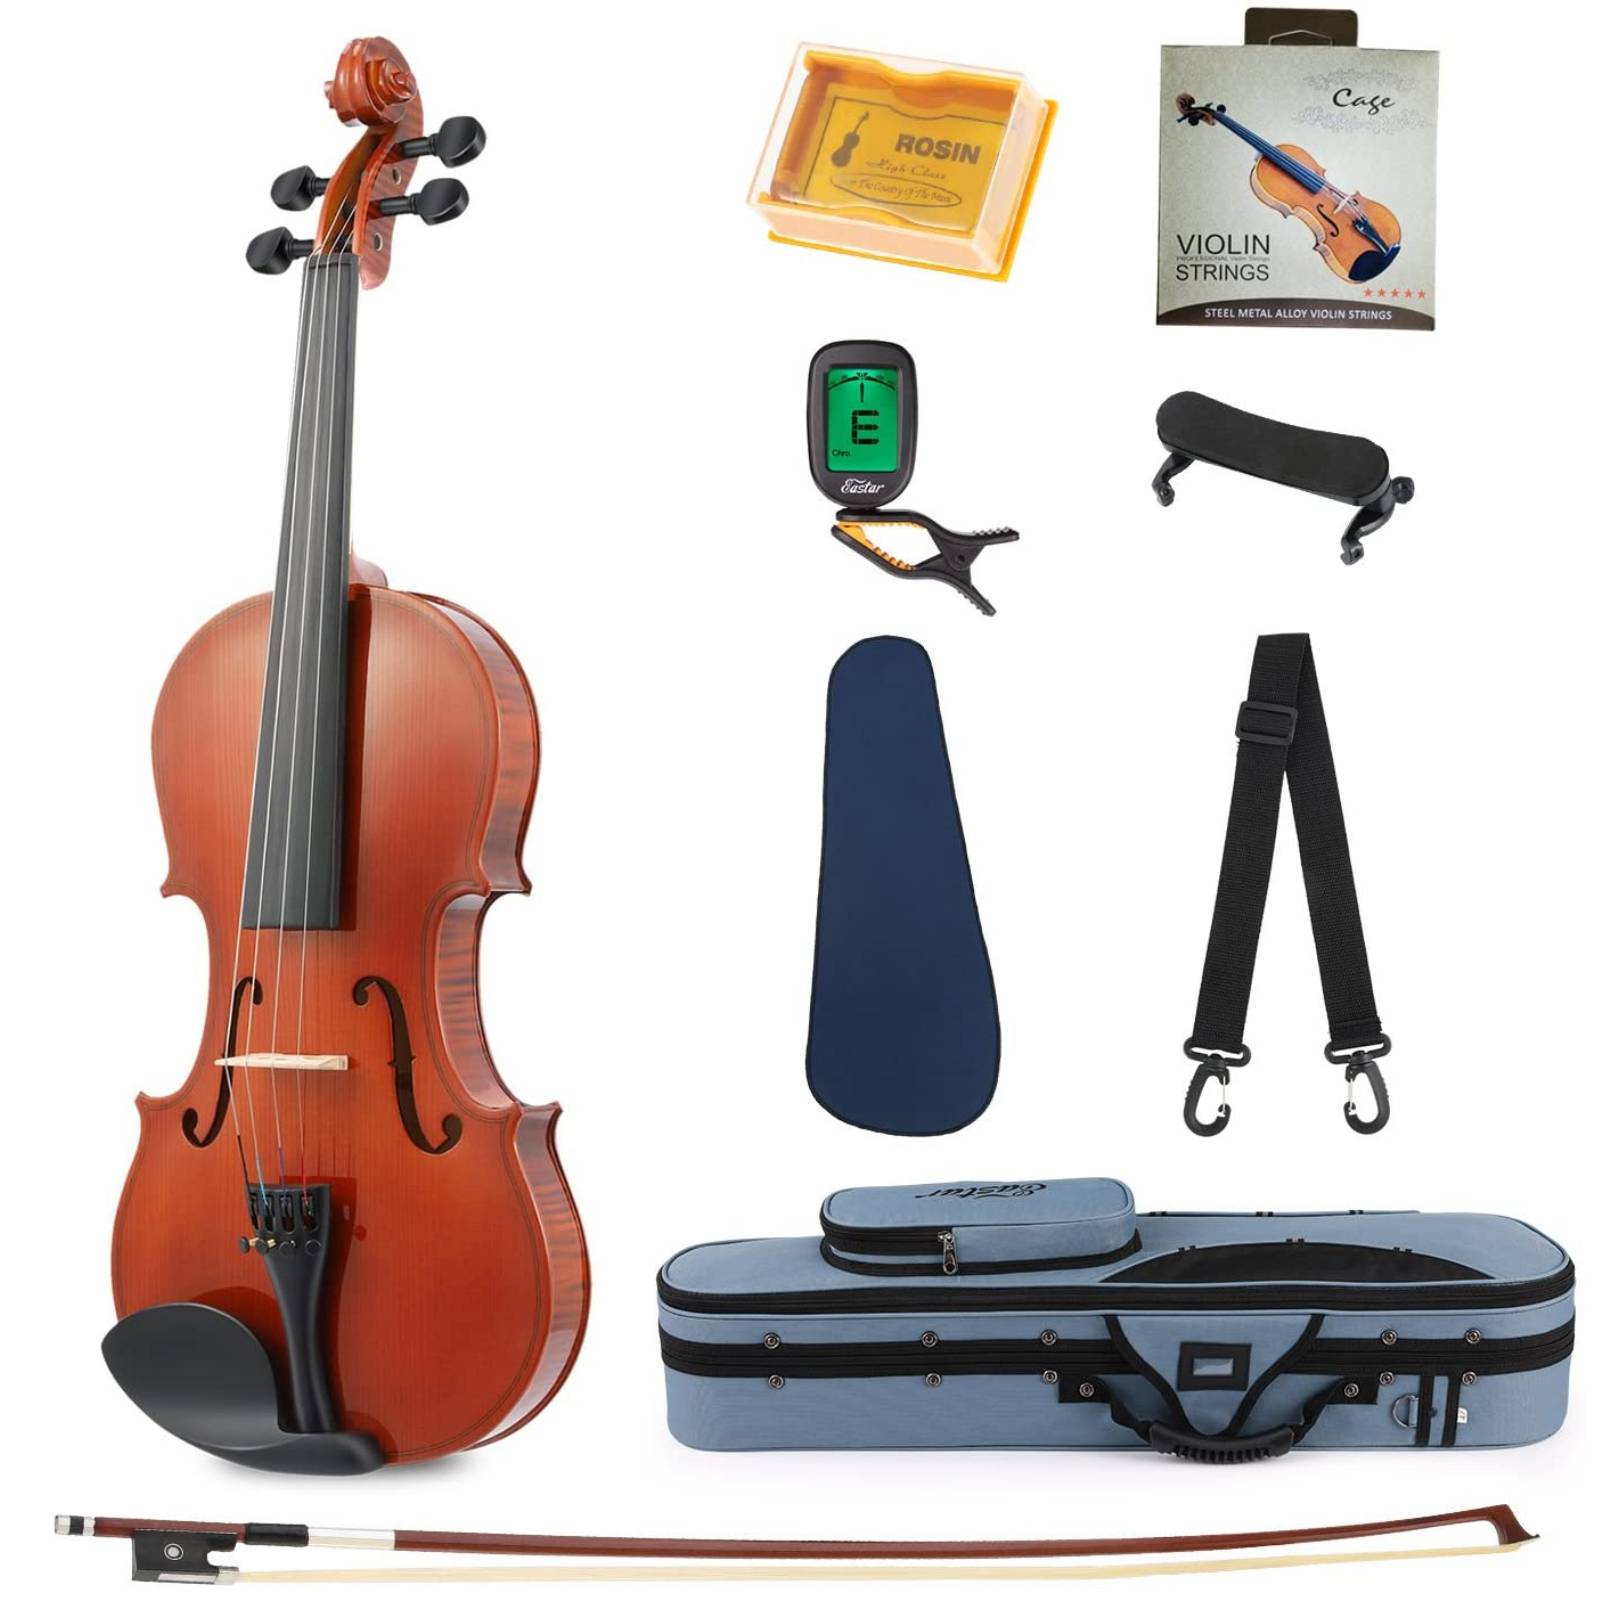 

Eastar EVA-1 1/4 Violin Set for Beginner with Hard Case/Shoulder Rest/Bow/Rosin/Clip-on Tuner/Extra Strings